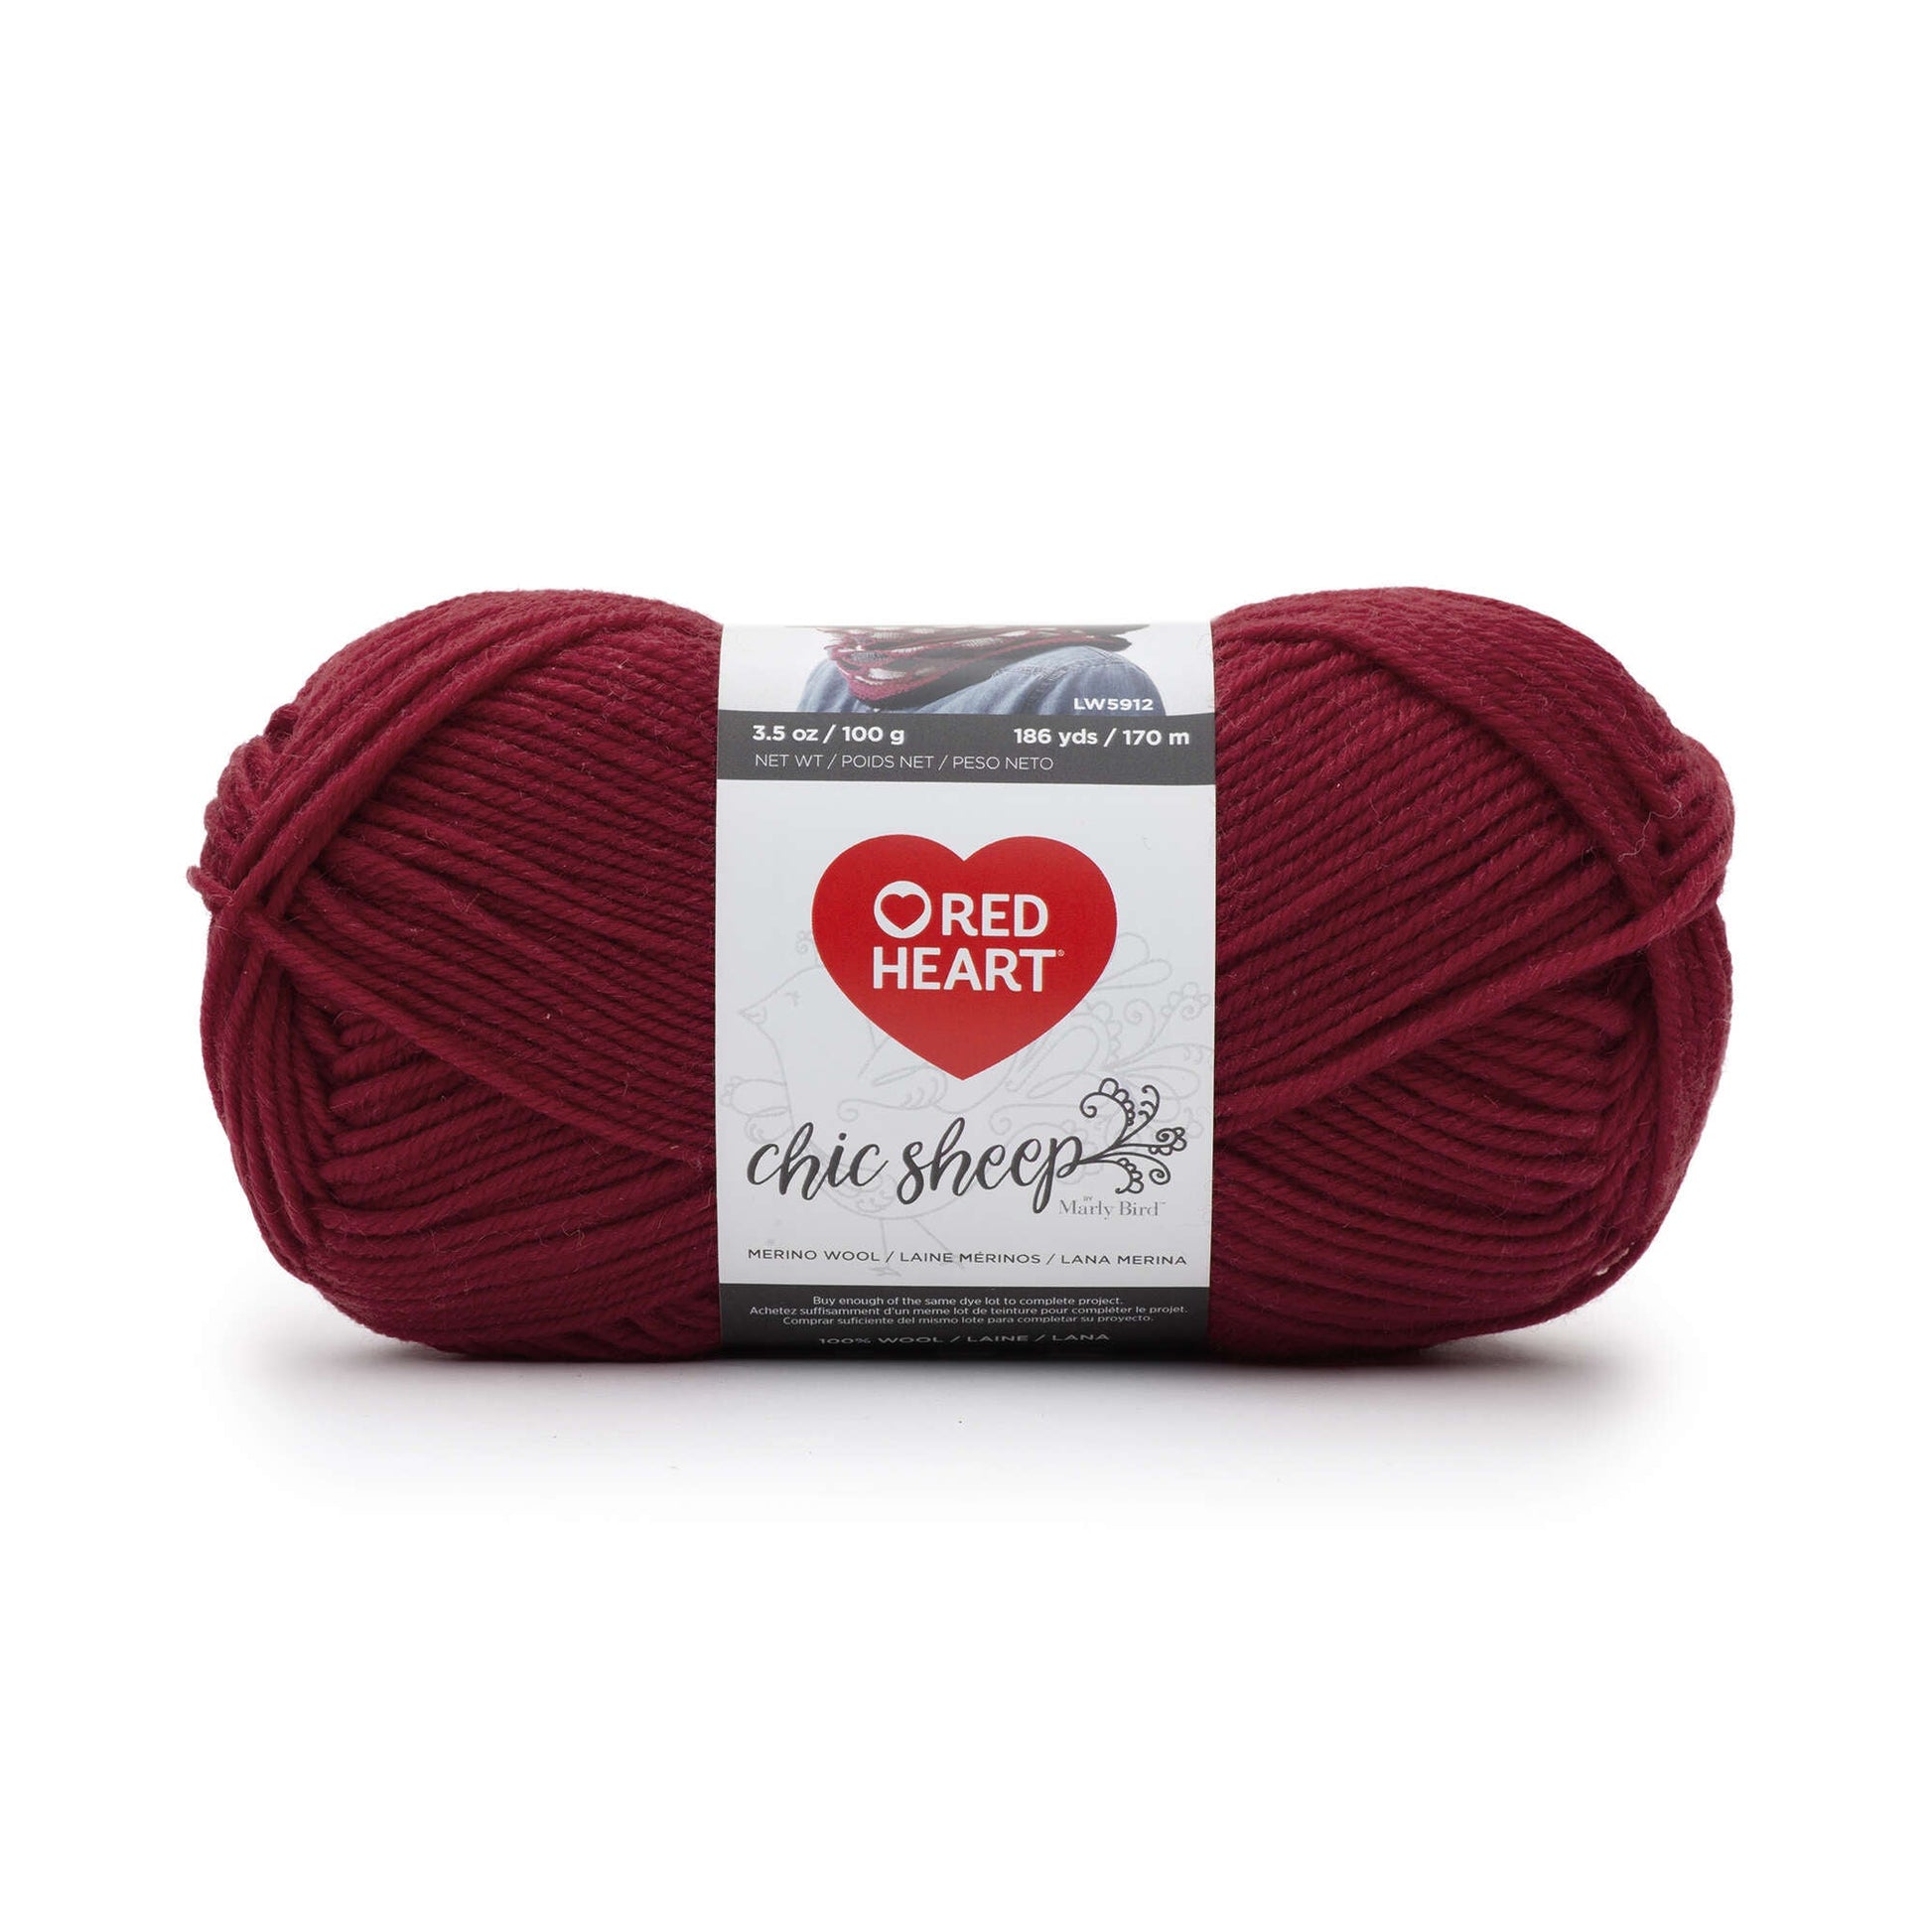 Red Heart Chic Sheep Yarn - Clearance shades